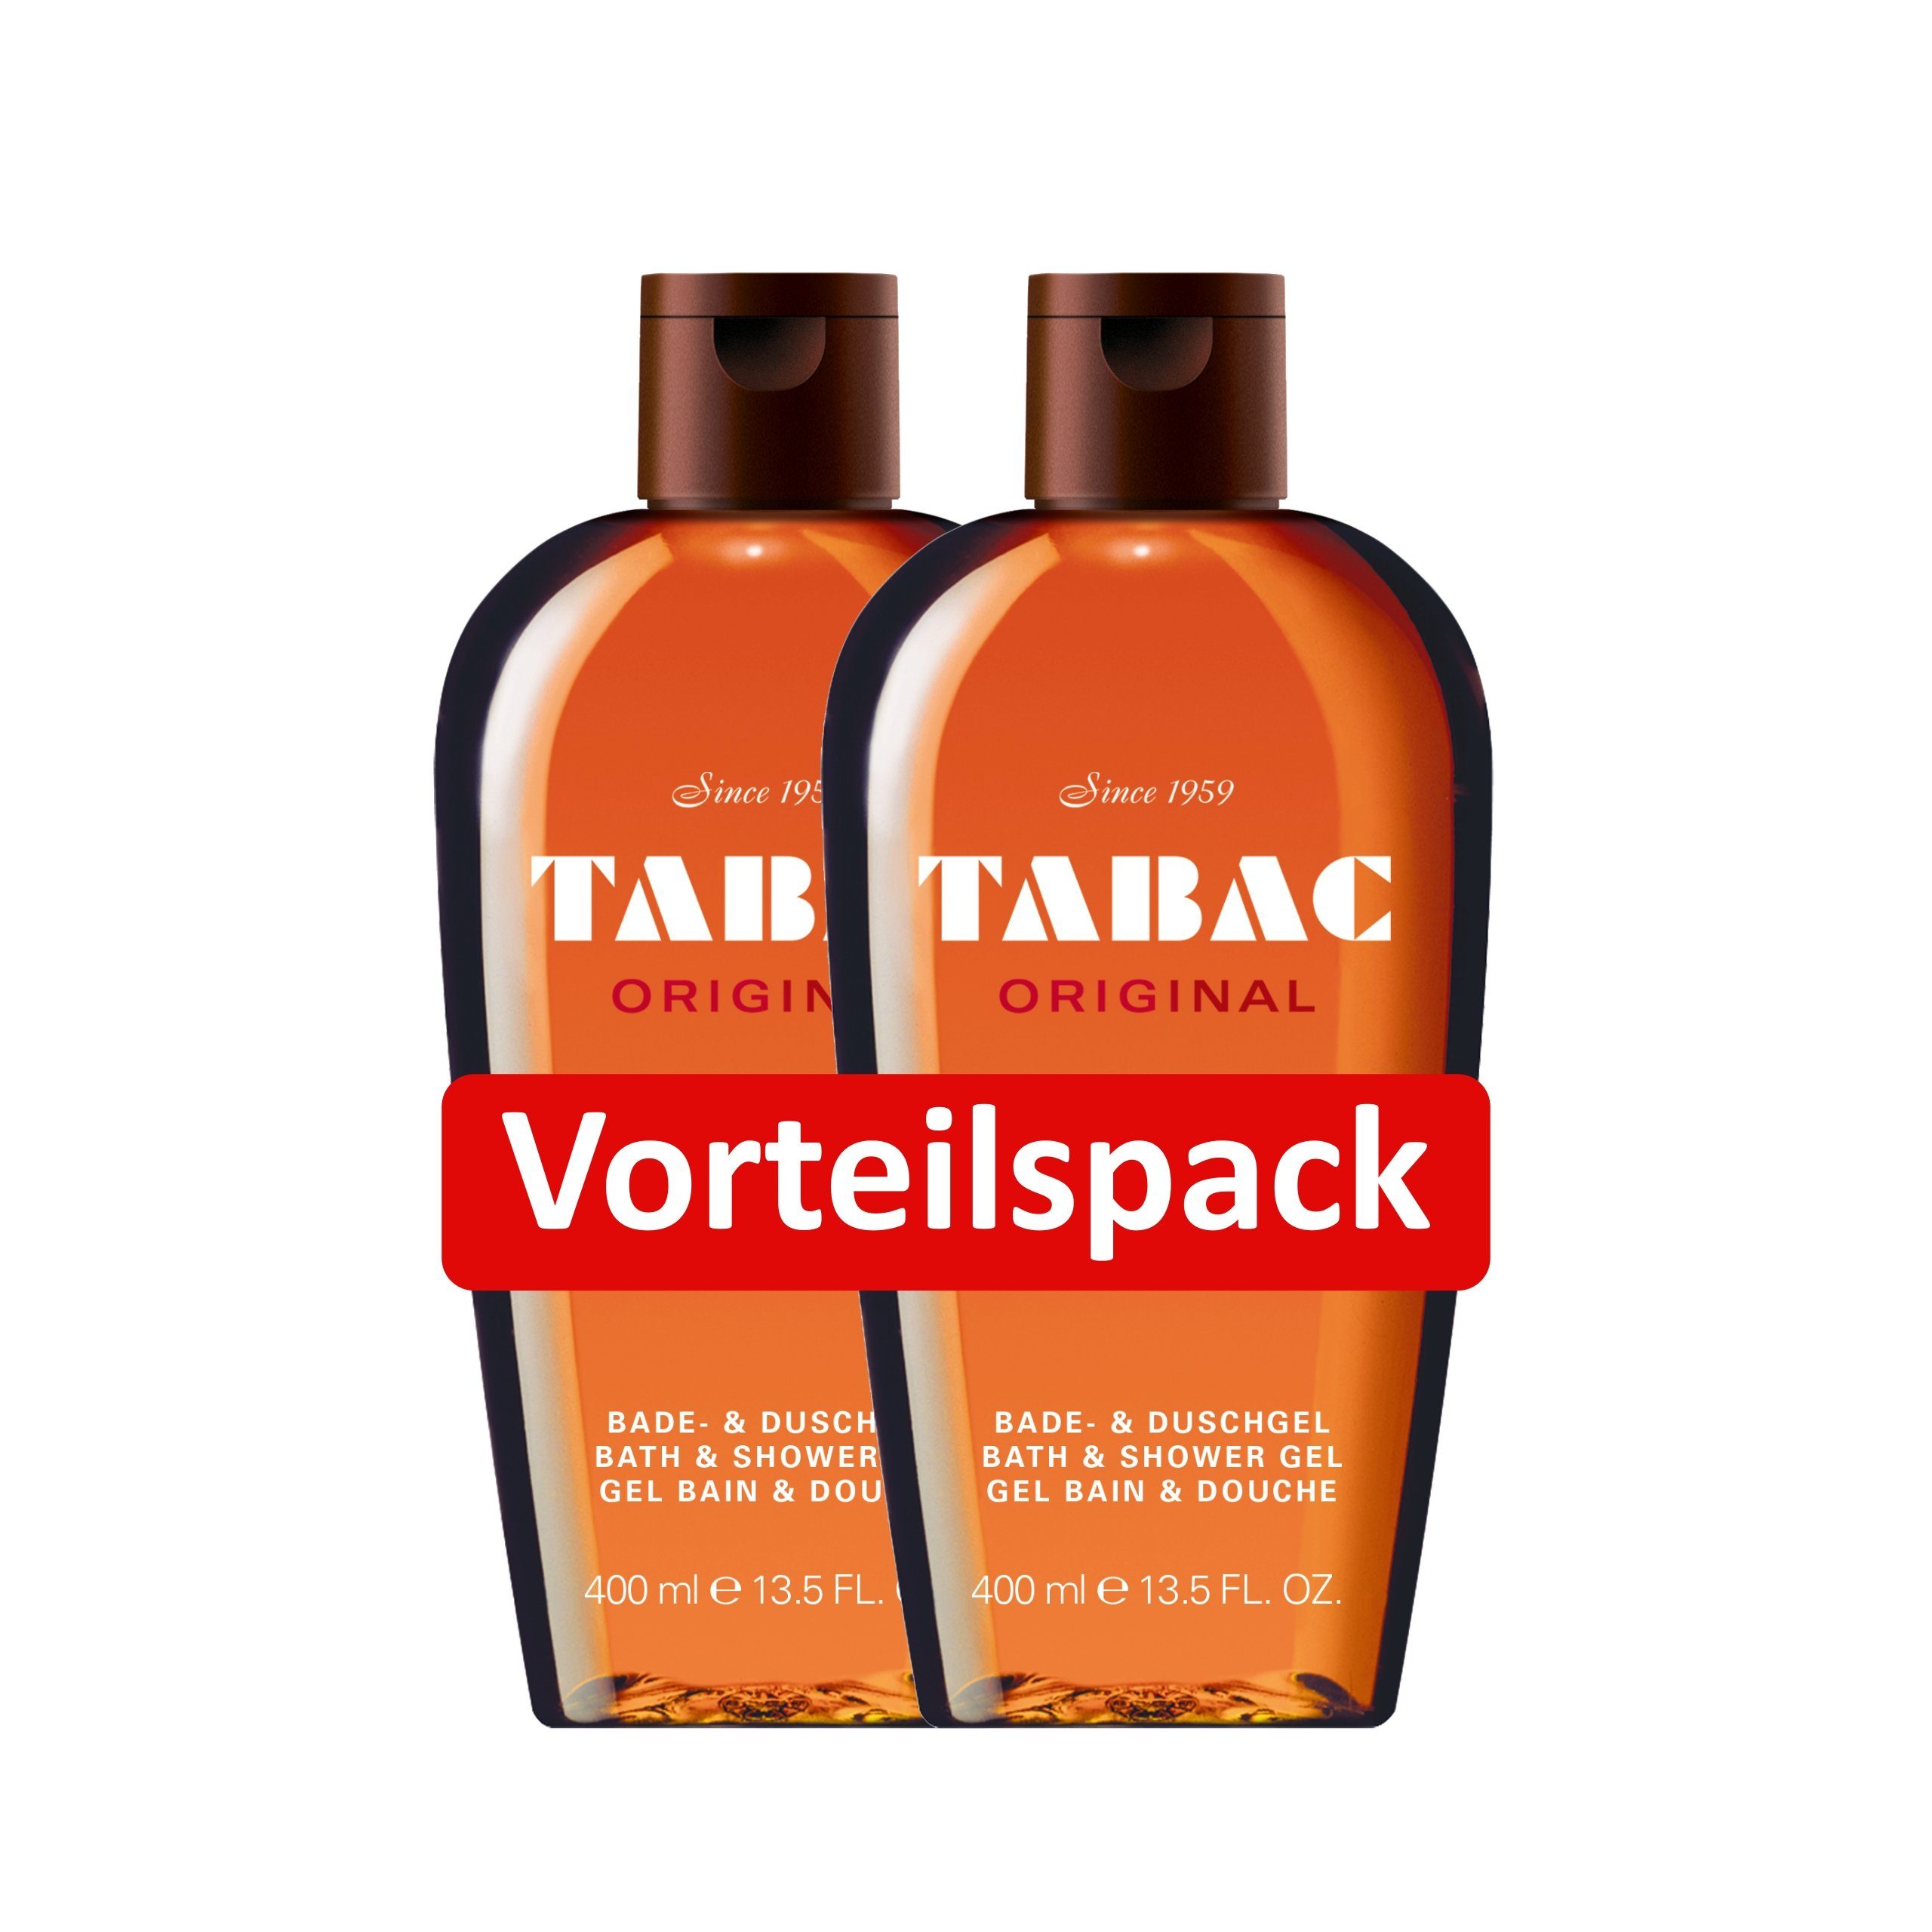 Haushalt Duschgele Tabac Original Duschgel Tabac Original Shower Gel 2 x 400 ml VORTEILSPACK